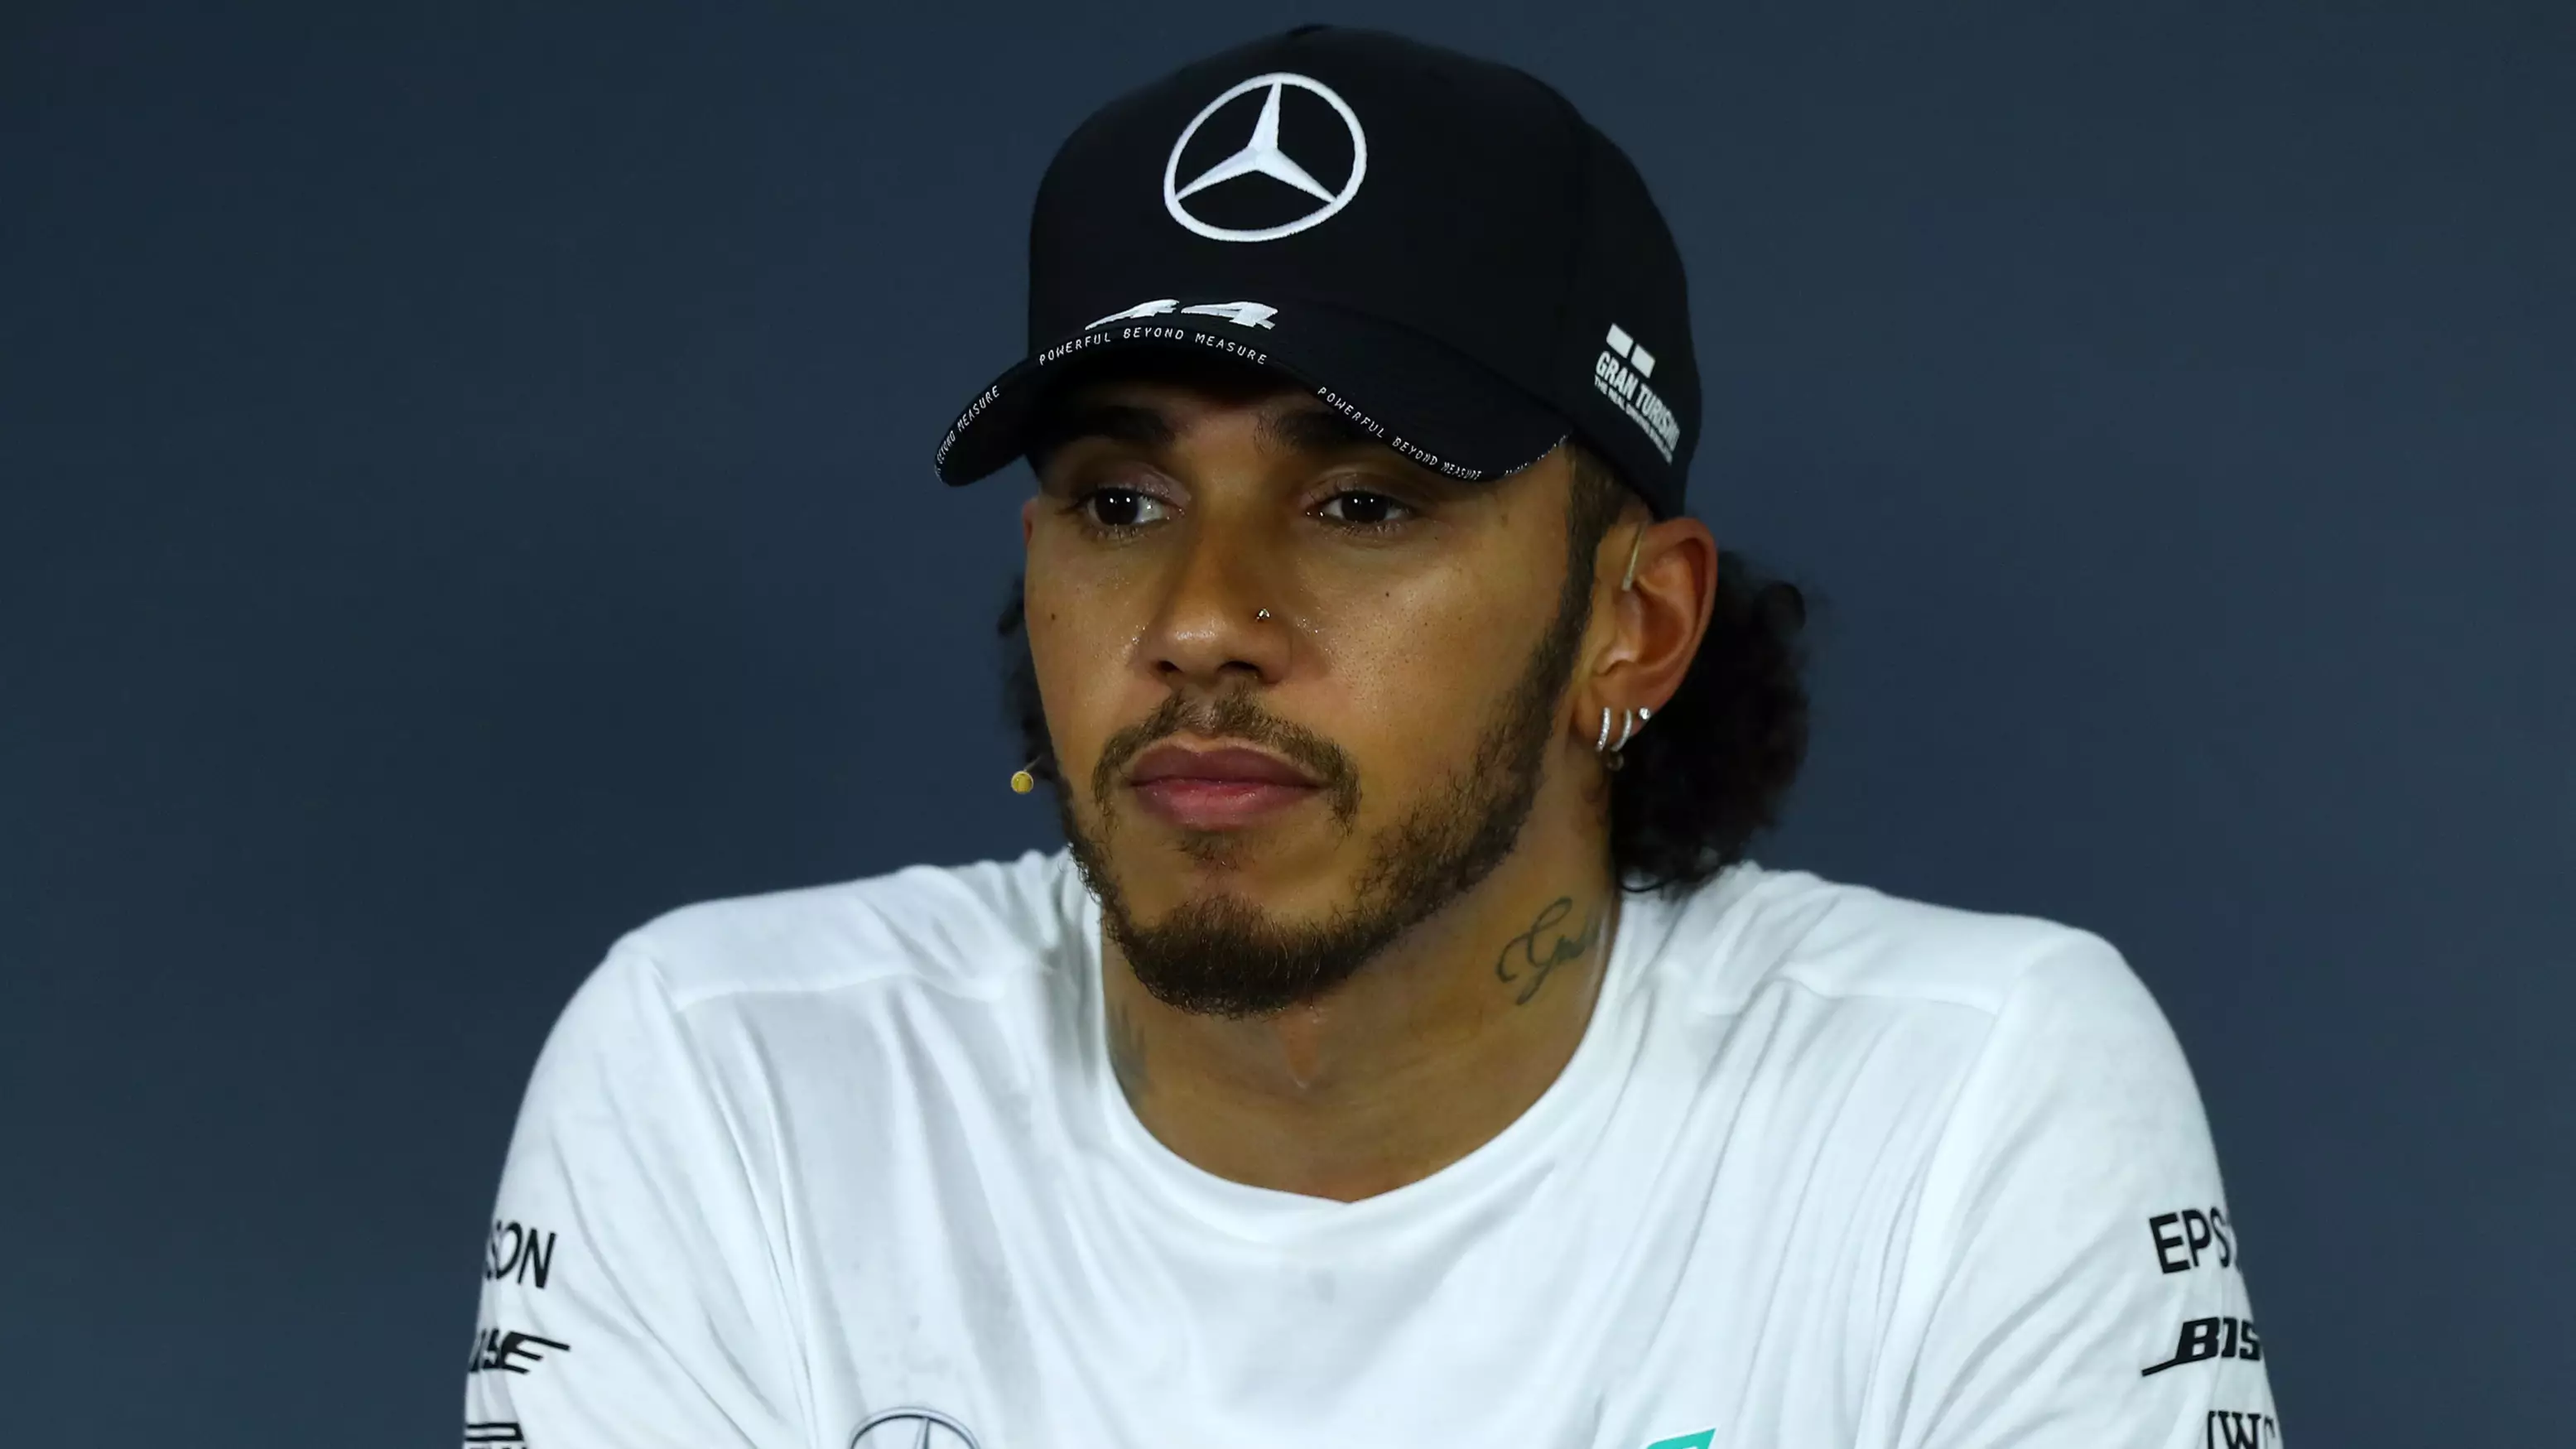 Lewis Hamilton Reacted To Anthoine Hubert’s Fatal Crash Live On Air